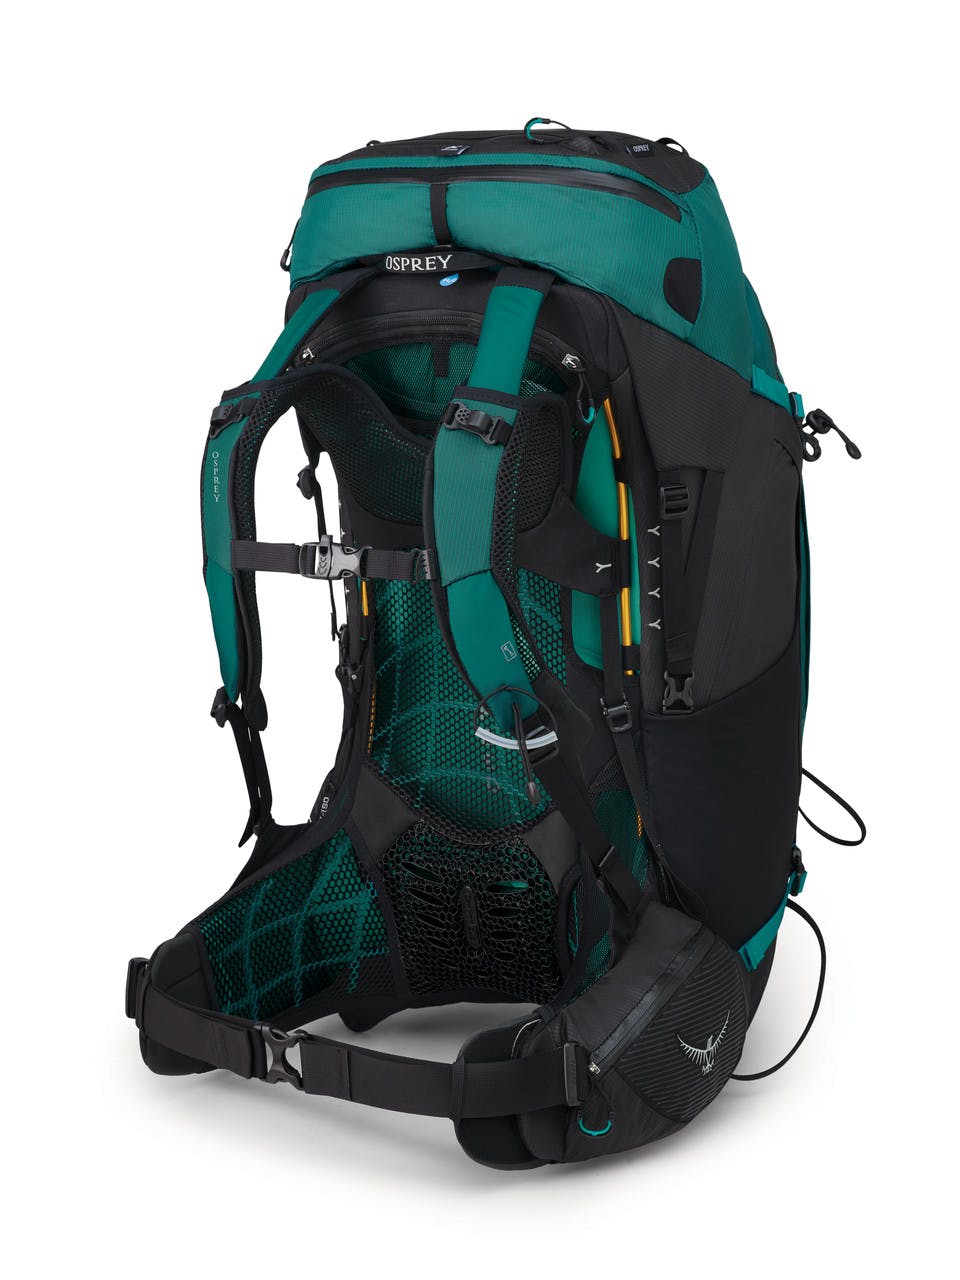 UNLTD AntiGravity 64 Backpack Green